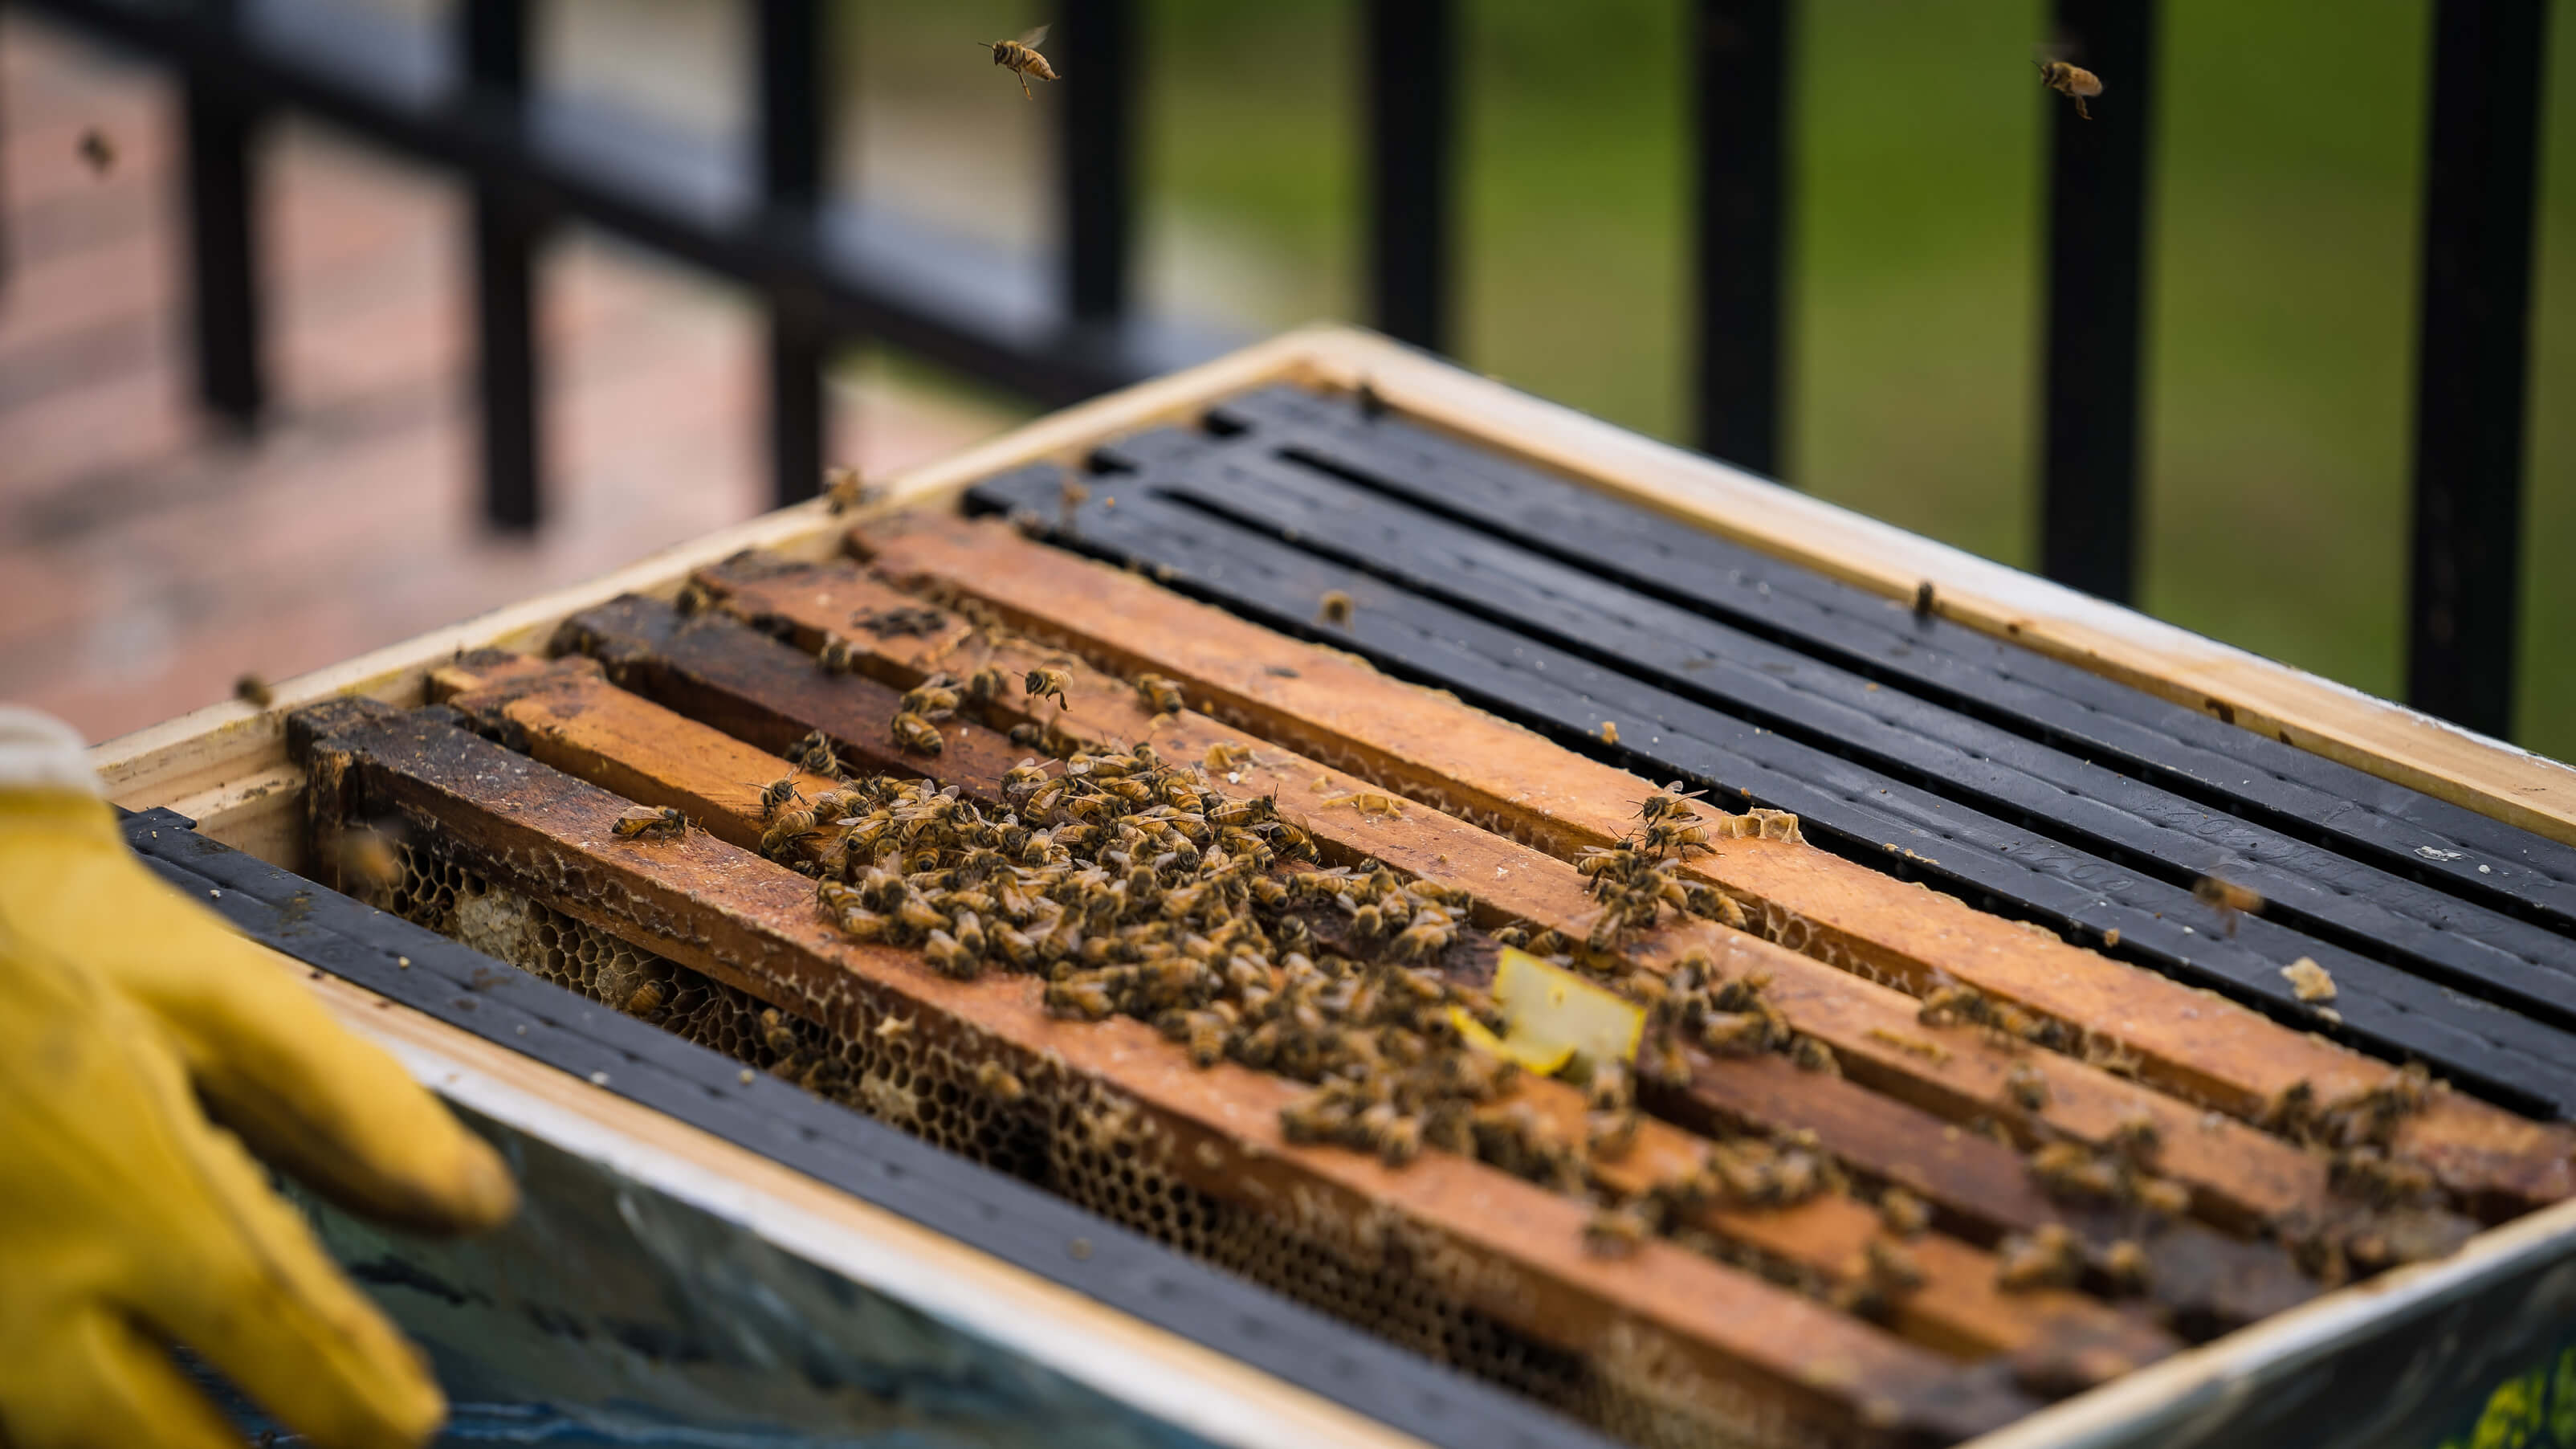 Bee Swarm Simulator Beginner Guide 2021 